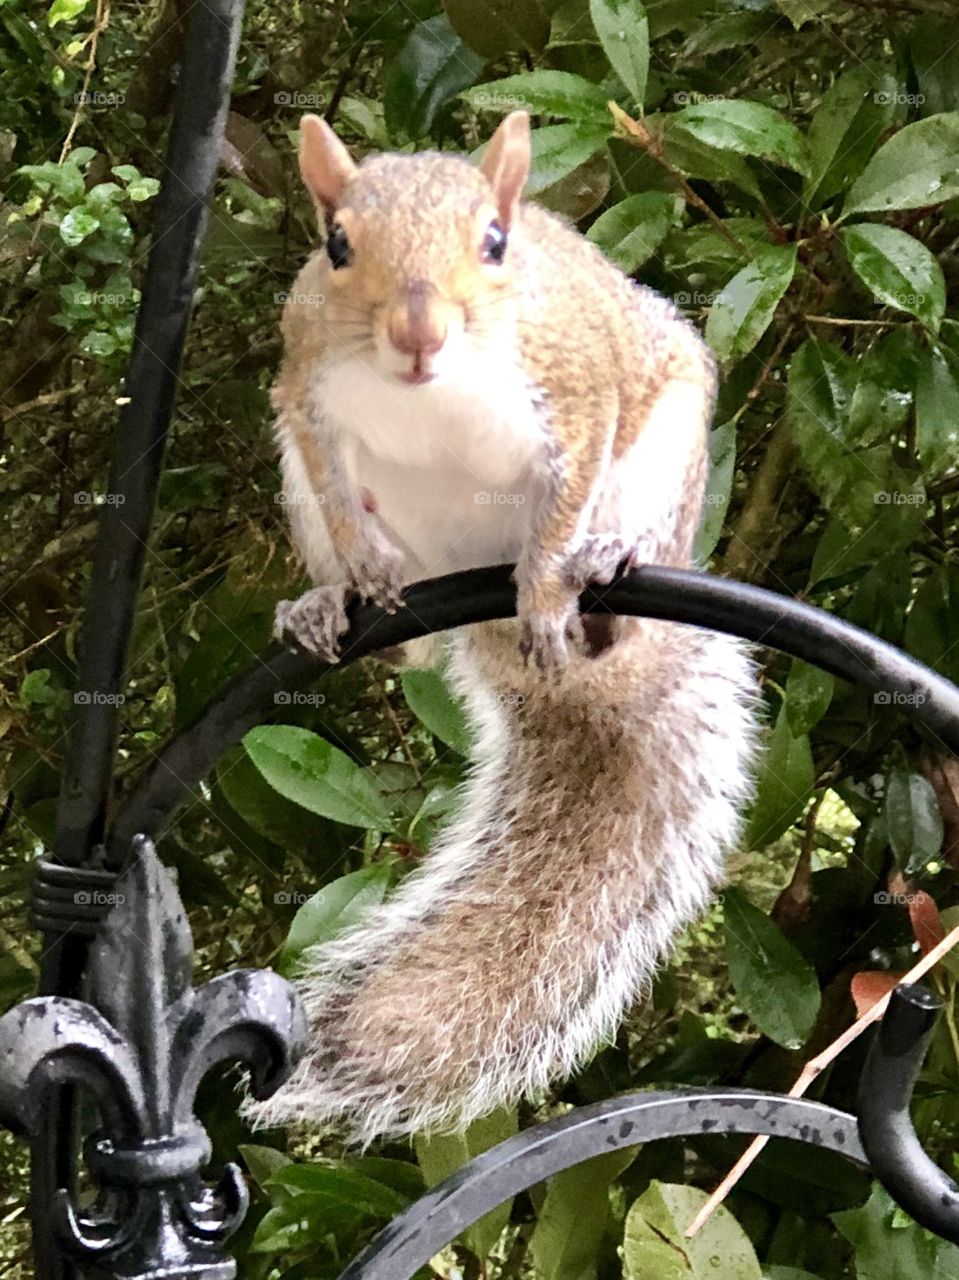 Helloooo Mr squirrel 